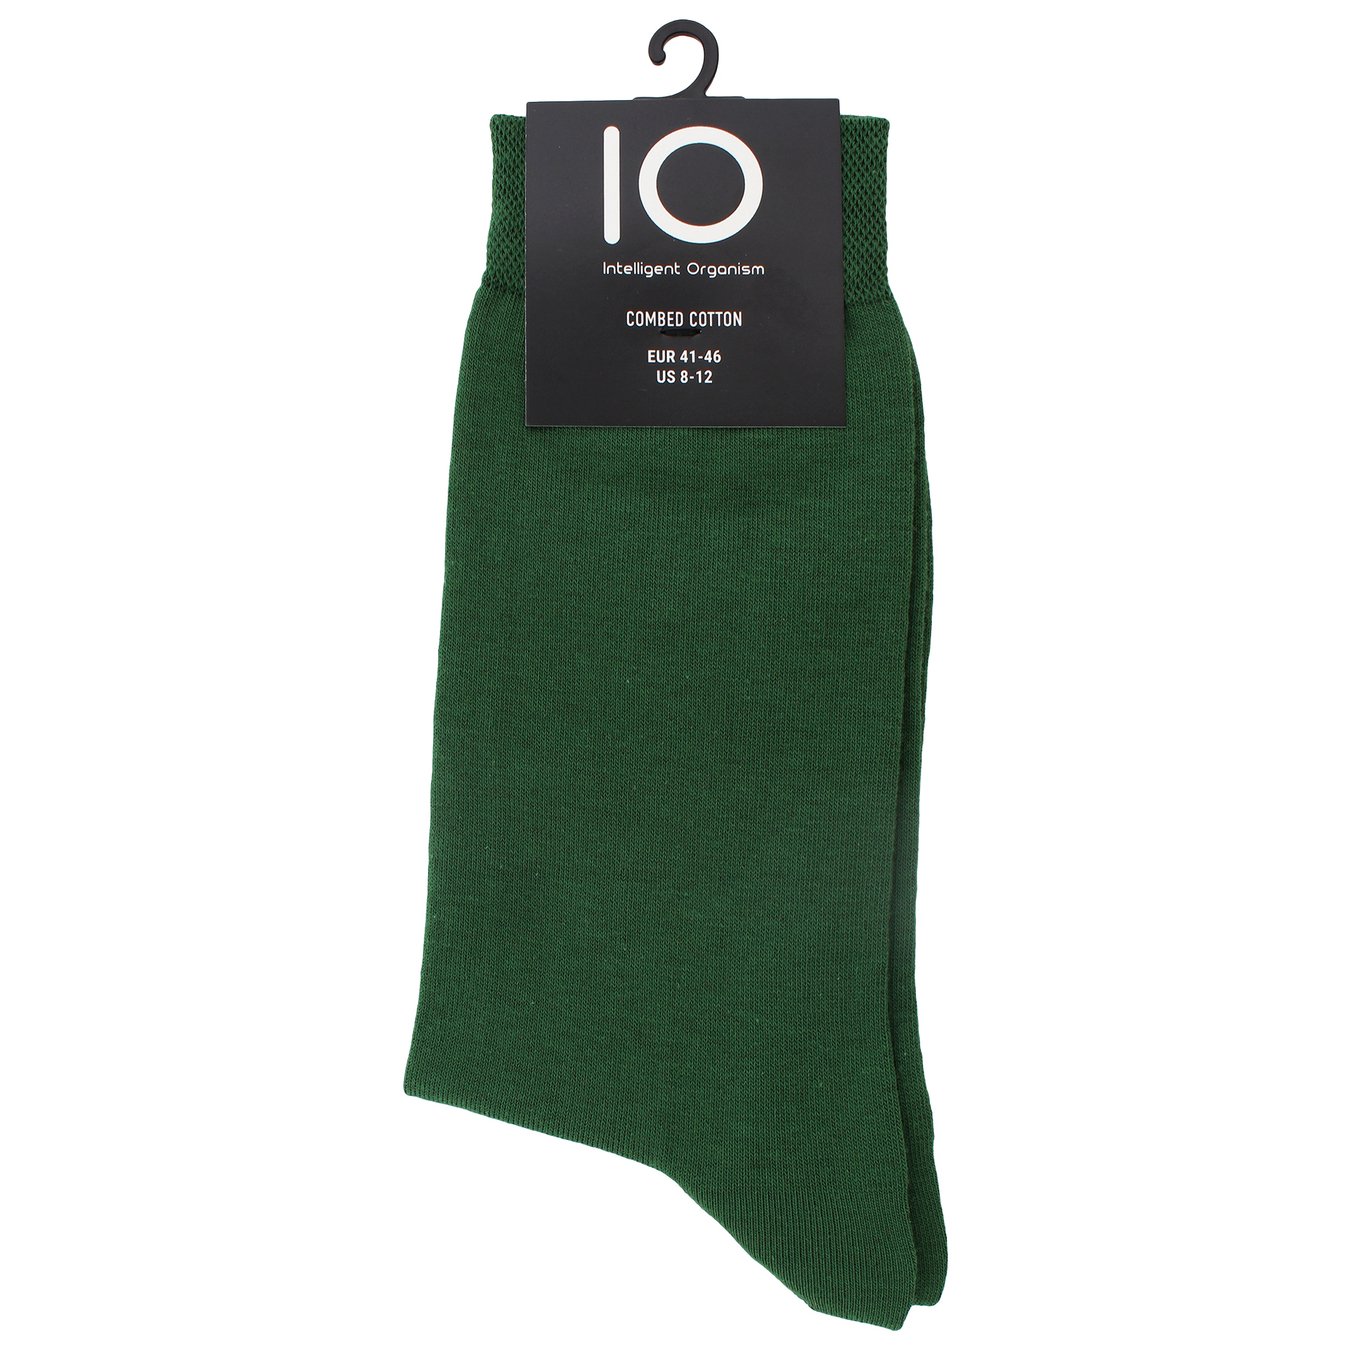 IO socks for men, dark green, 41-46 years old.